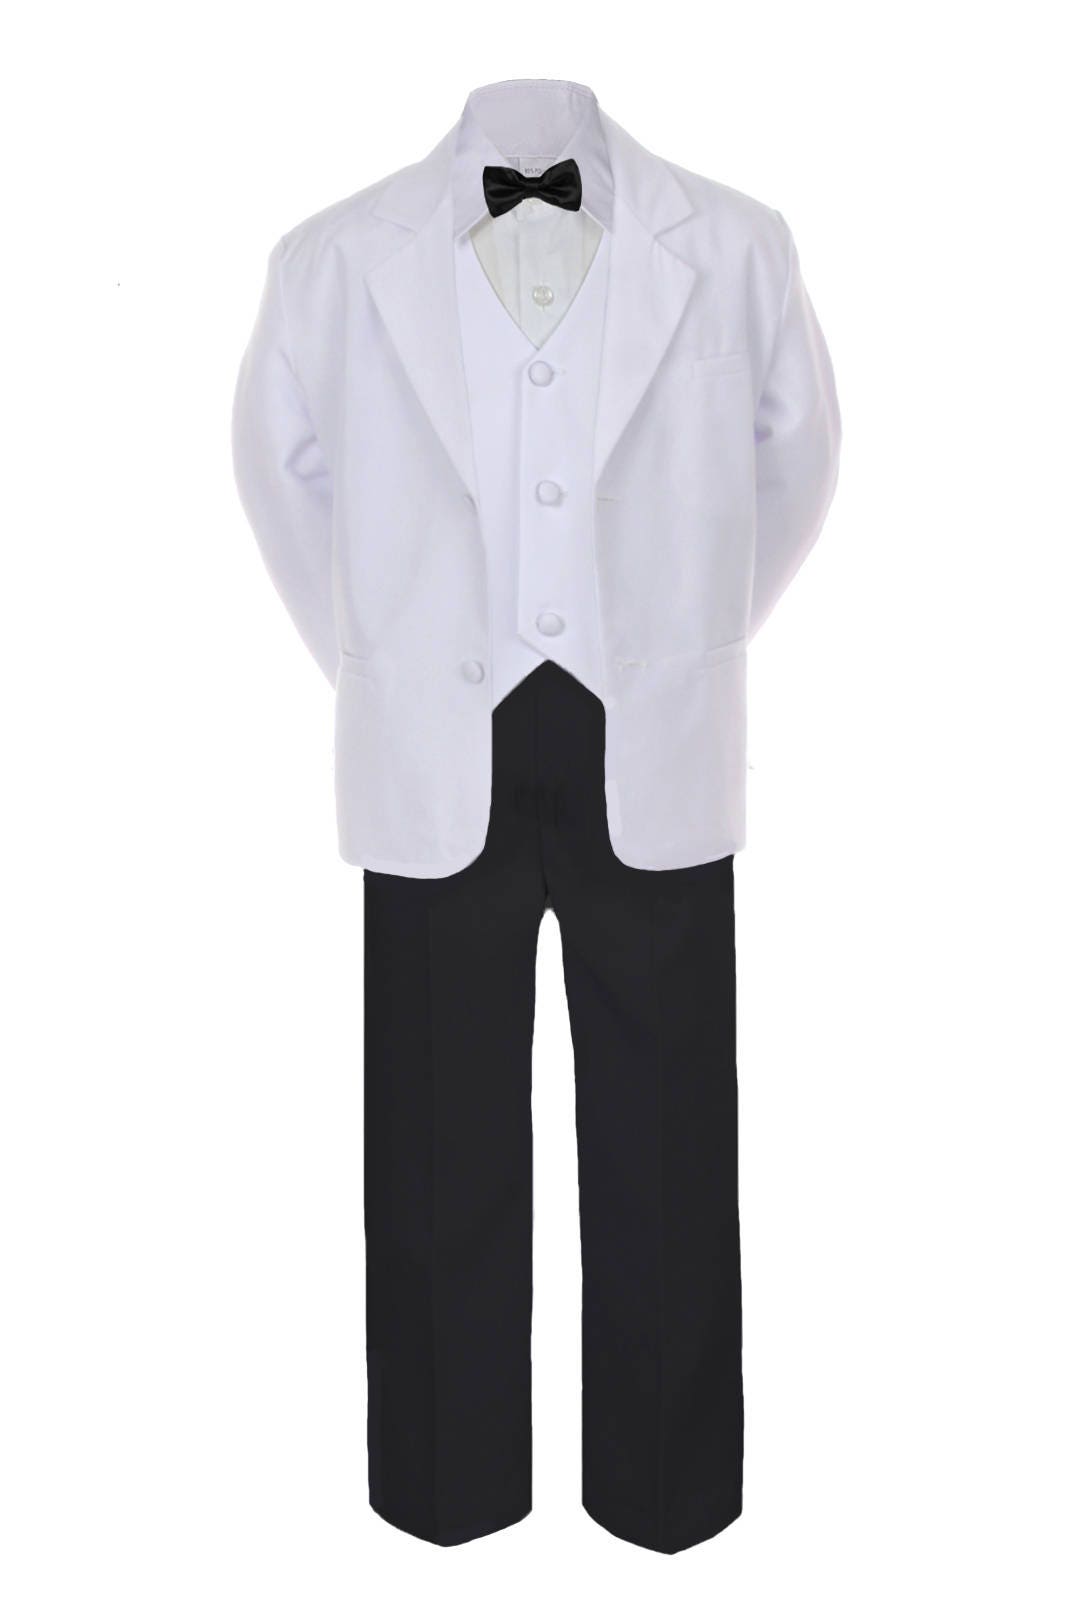 Aowdoy Men's 3 Piece Suits 2 Button Slim Fit Wedding Dress Tuxedo for Men  Prom Business Casual Suit Black XS at Amazon Men's Clothing store